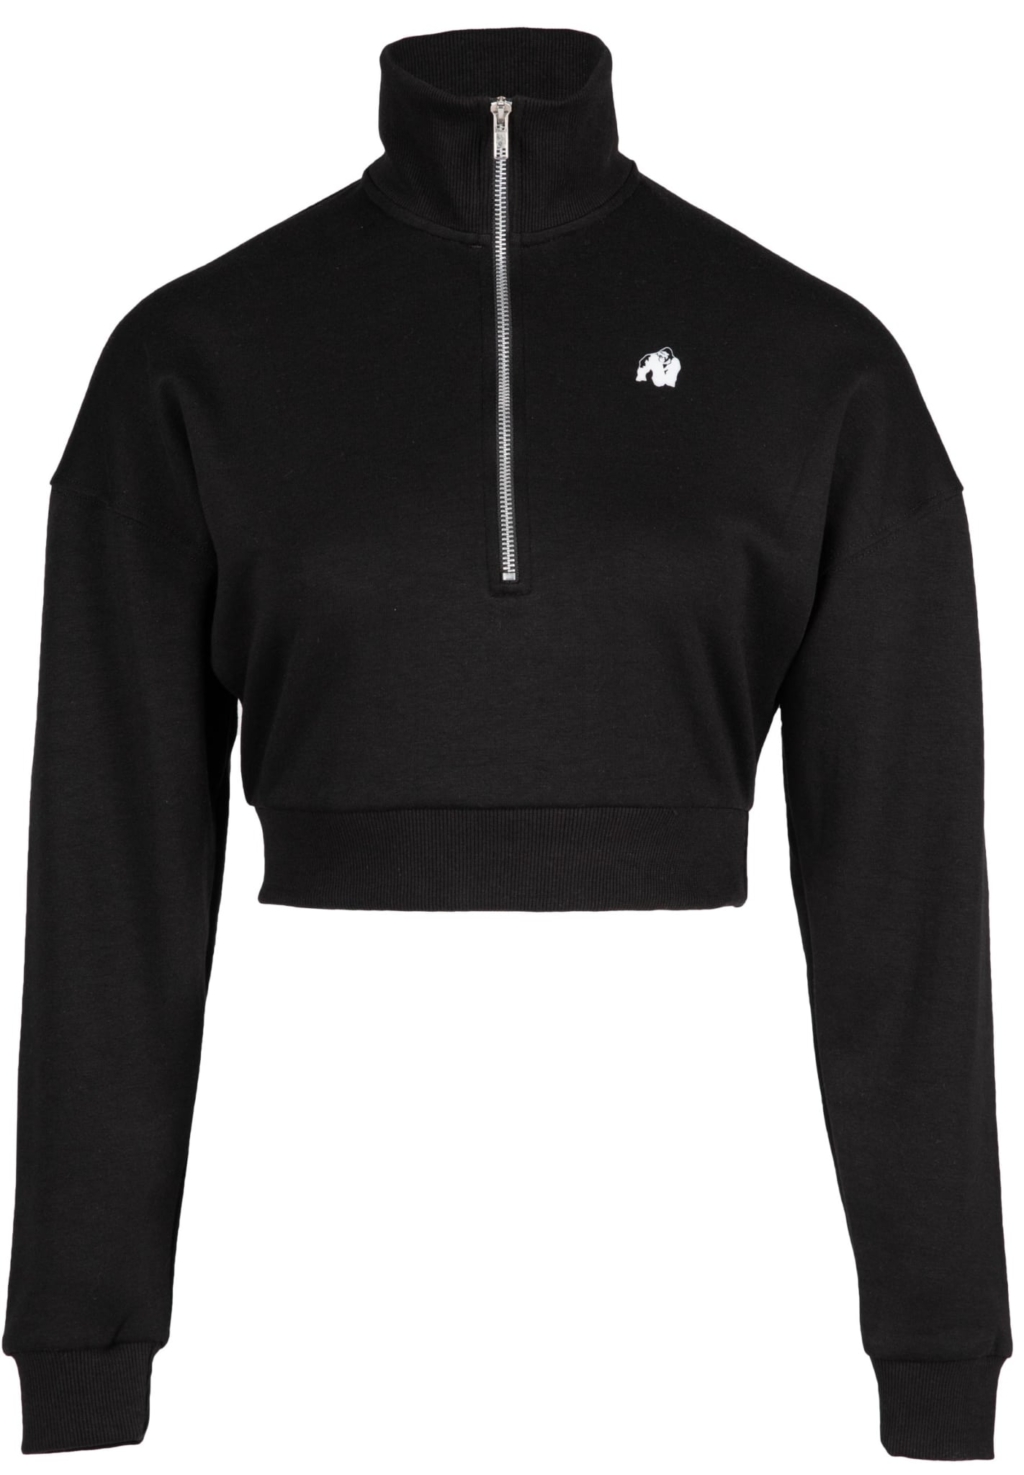 91706900 ocala cropped half zip sweatshirt black 01 scaled